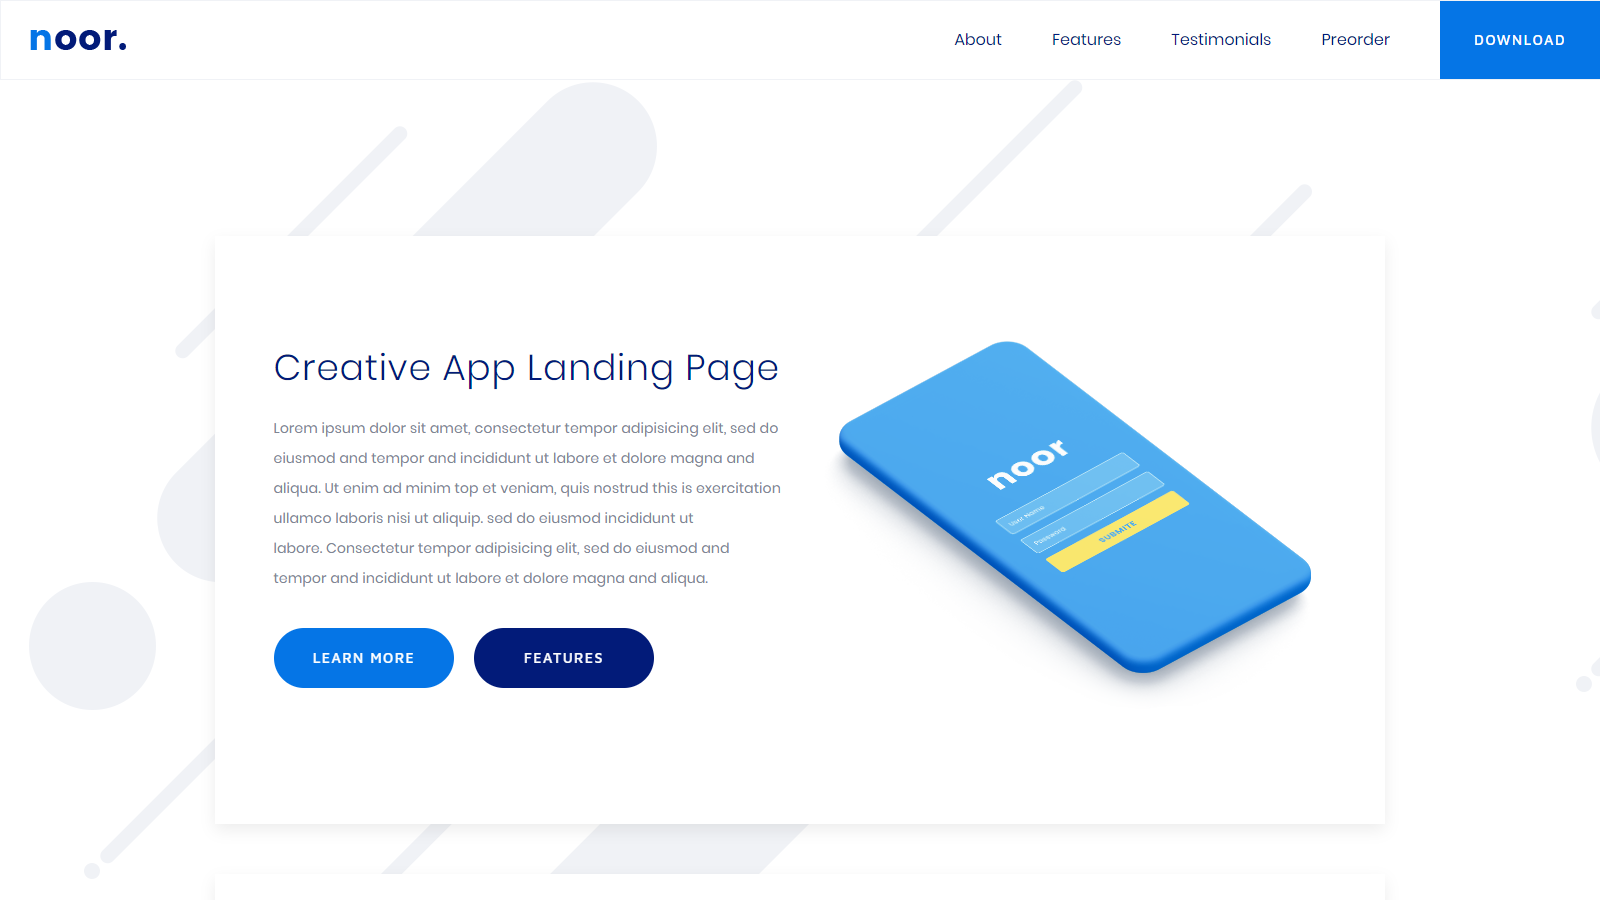 kreative App-Landingpage